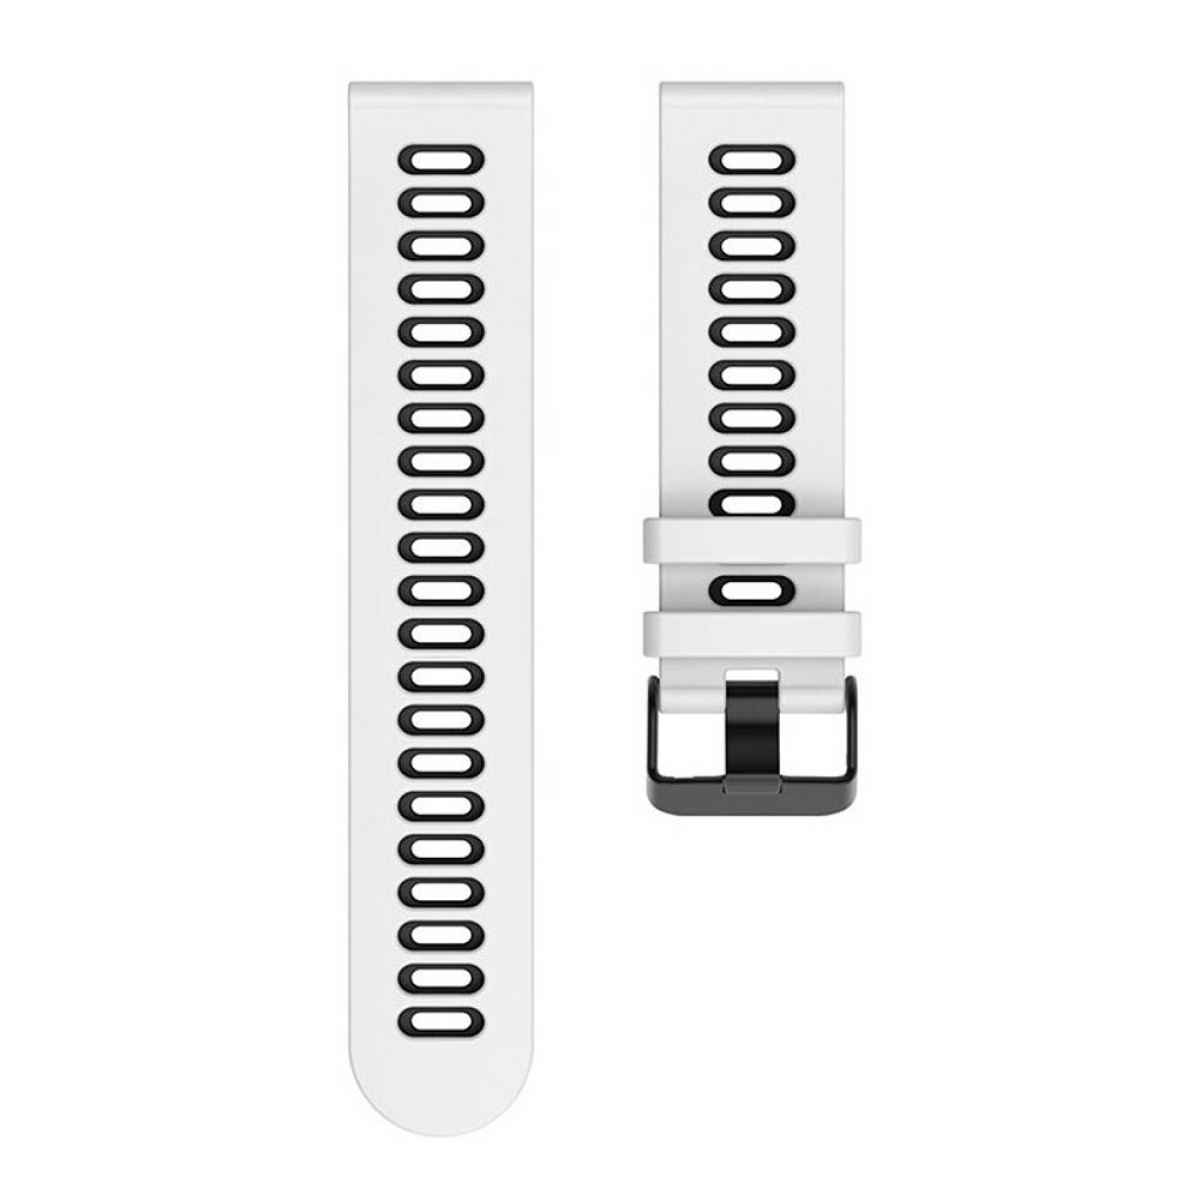 CASEONLINE Twin, Smartband, Garmin, Galaxy Weiß/Schwarz Watch (44mm), 5